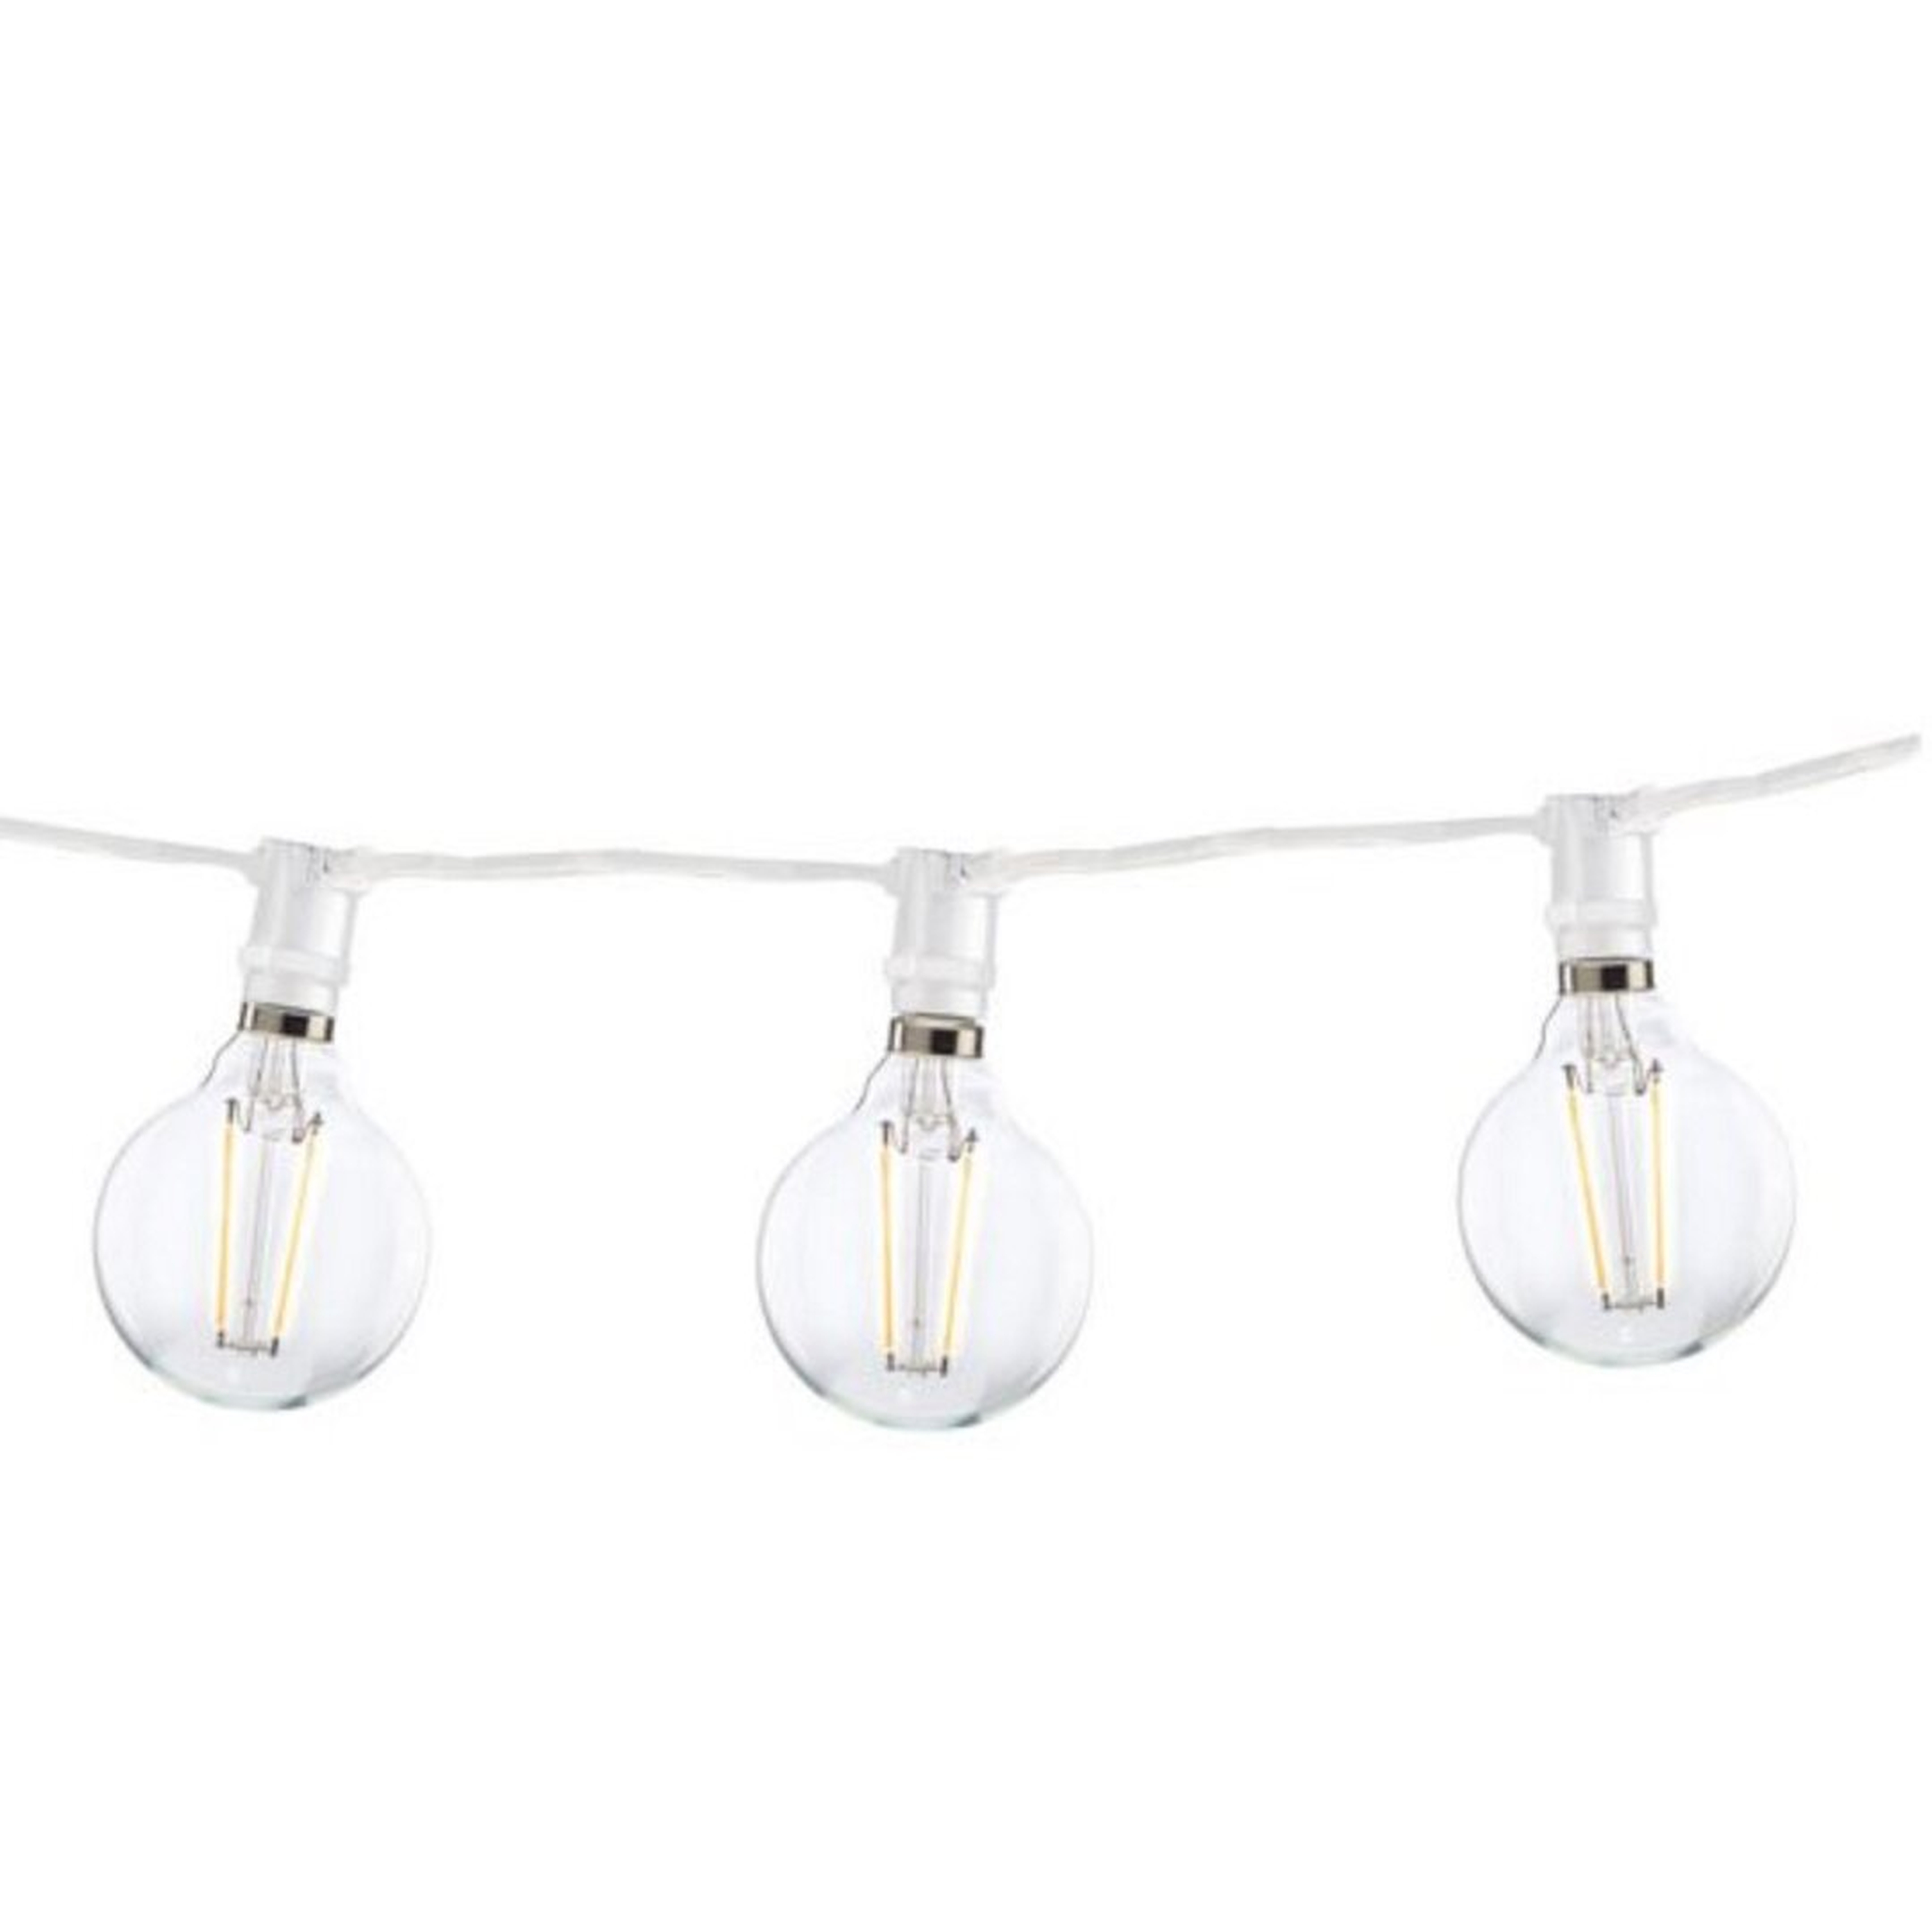 "Bulbrite Industries 15-Light Globe String Lights" - Perigold